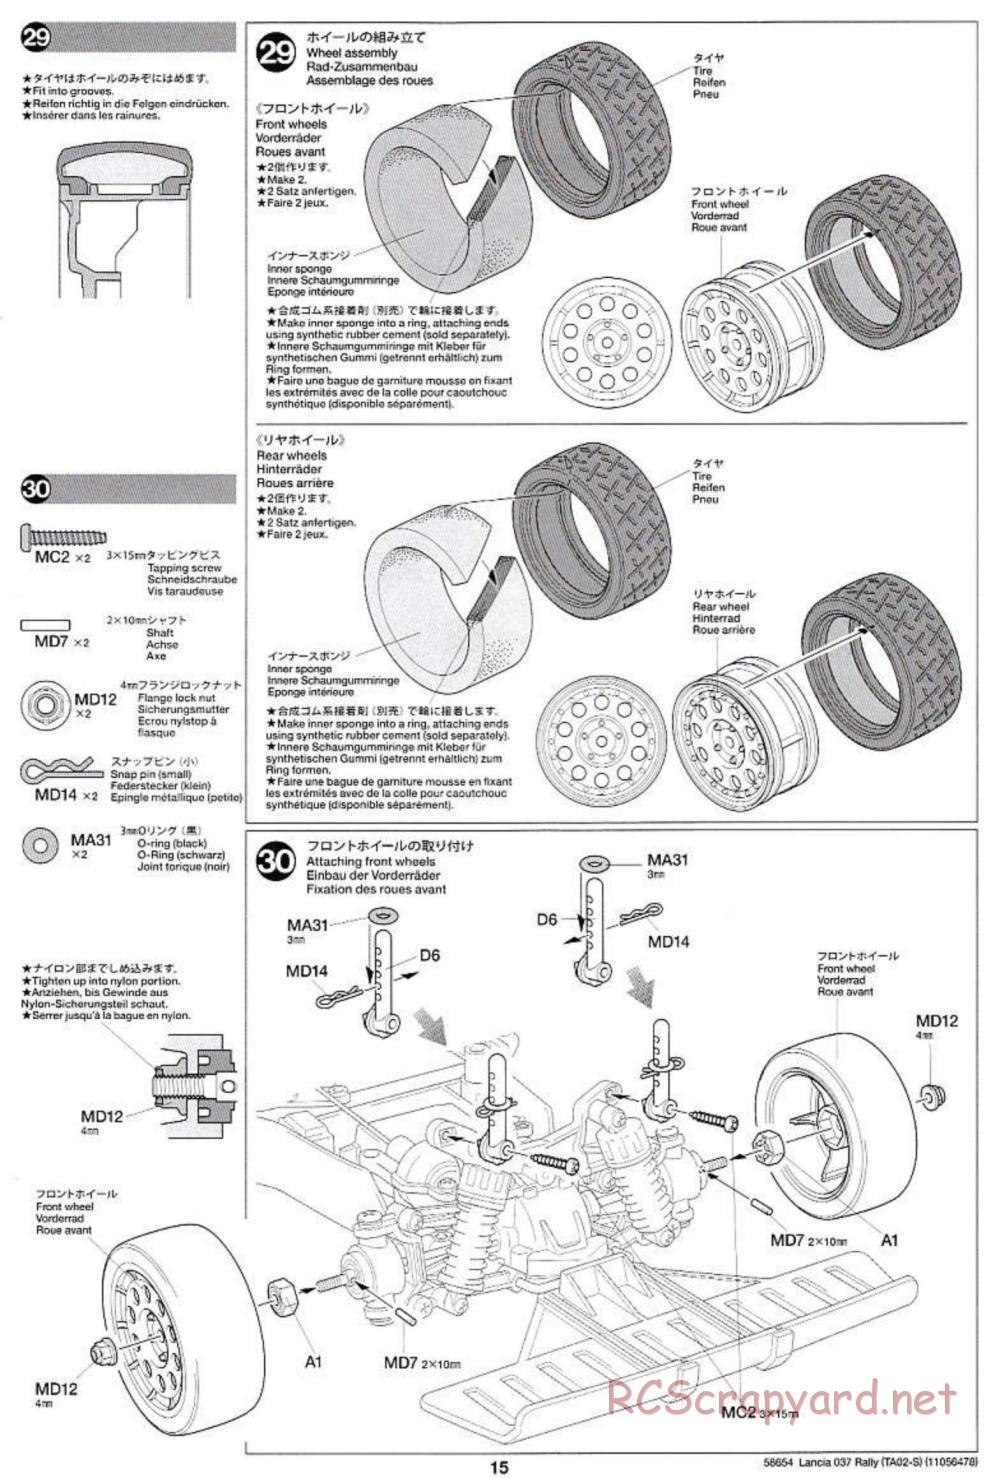 Tamiya - Lancia 037 Rally Chassis - Manual - Page 15